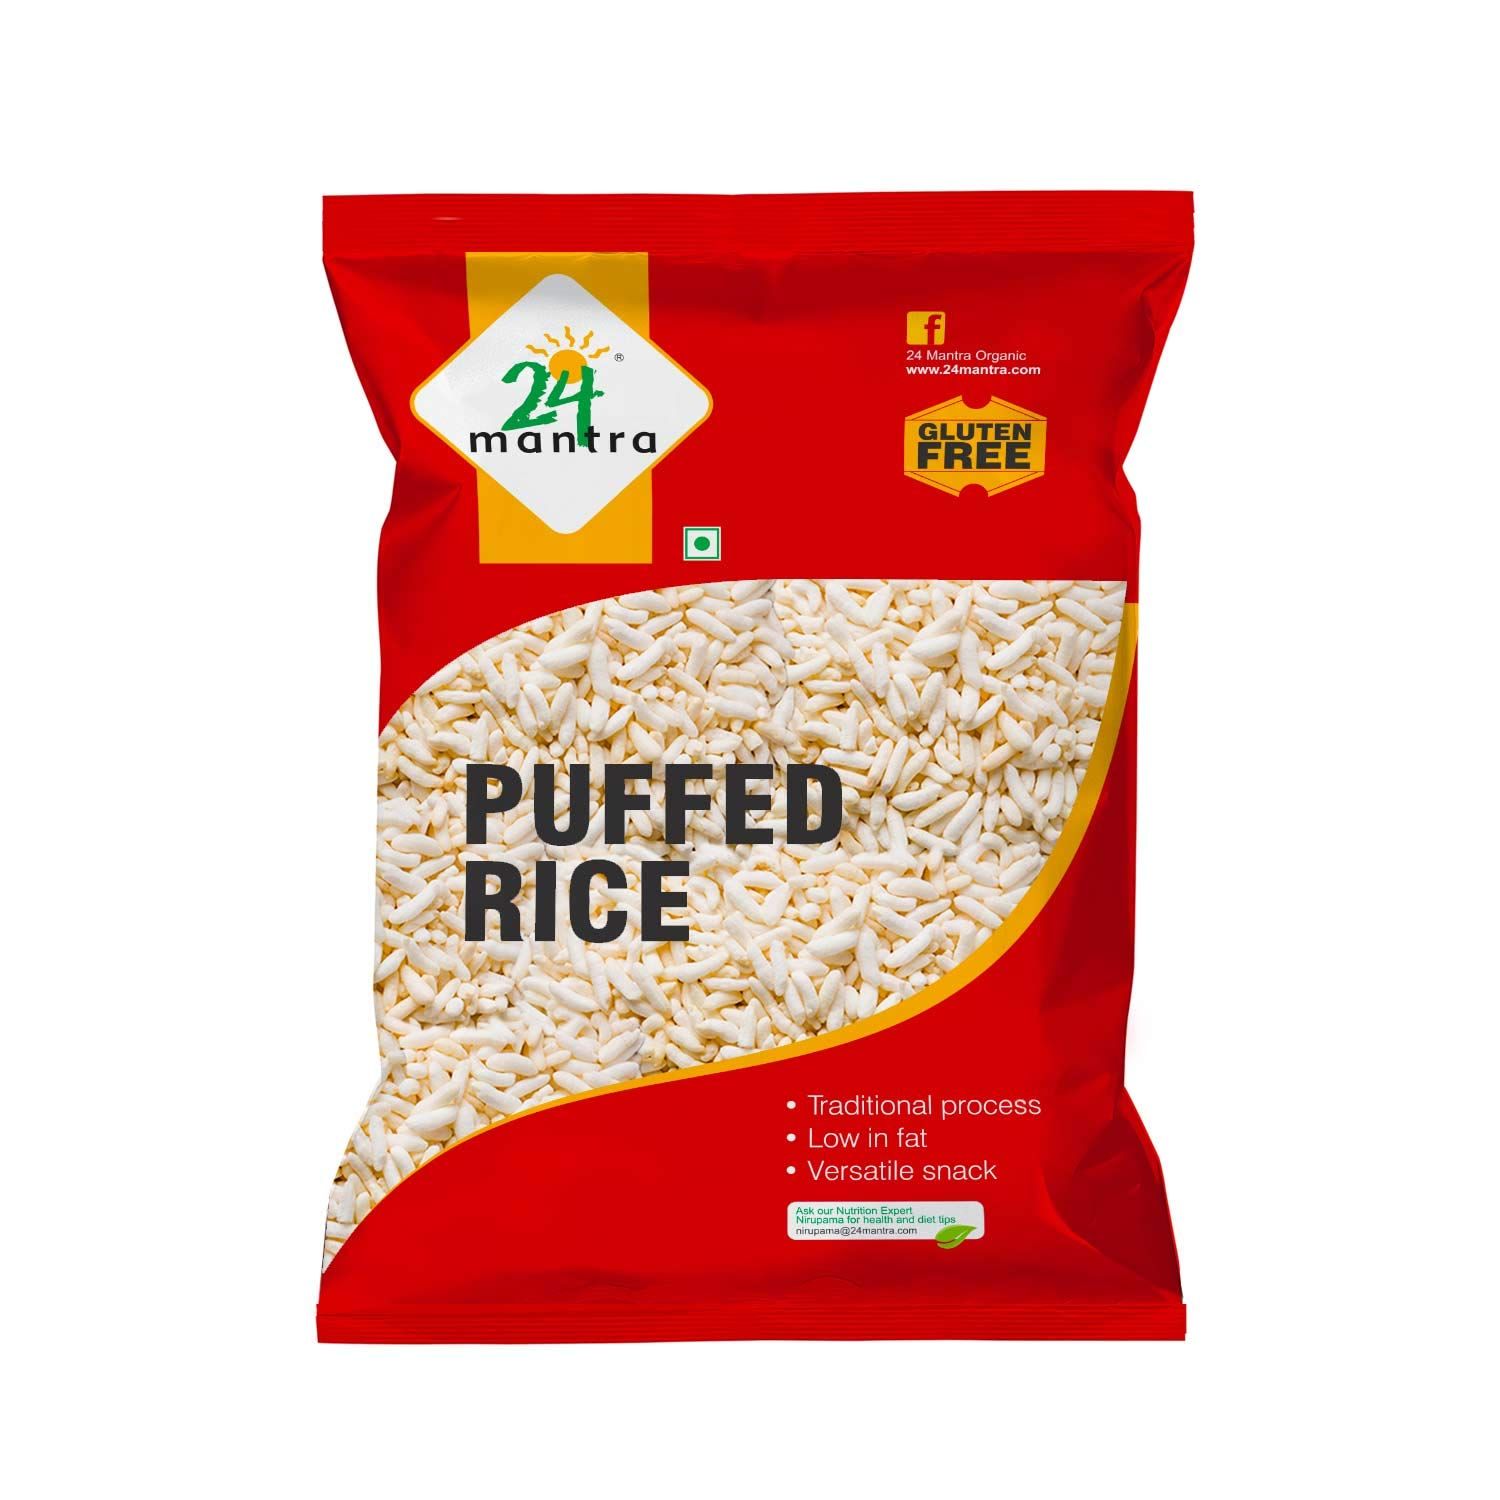 24 Mantra Organic Puffed Rice Image